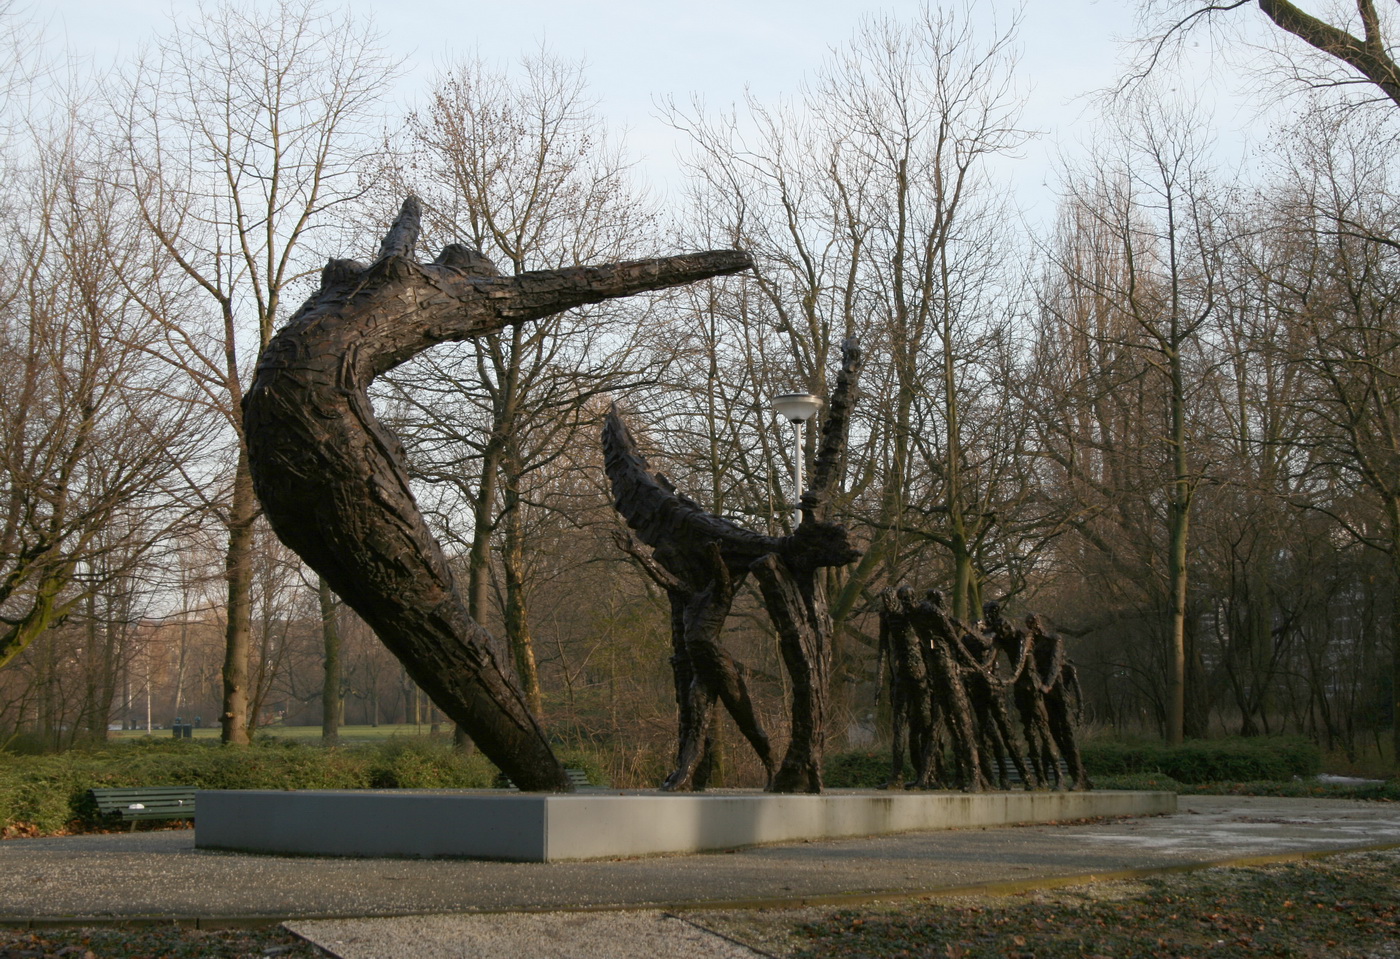 Nationaal Monument Slavernijverleden, Oosterpark, Amsterdam, Holland. Made by Erwin de Vries in 2002. 